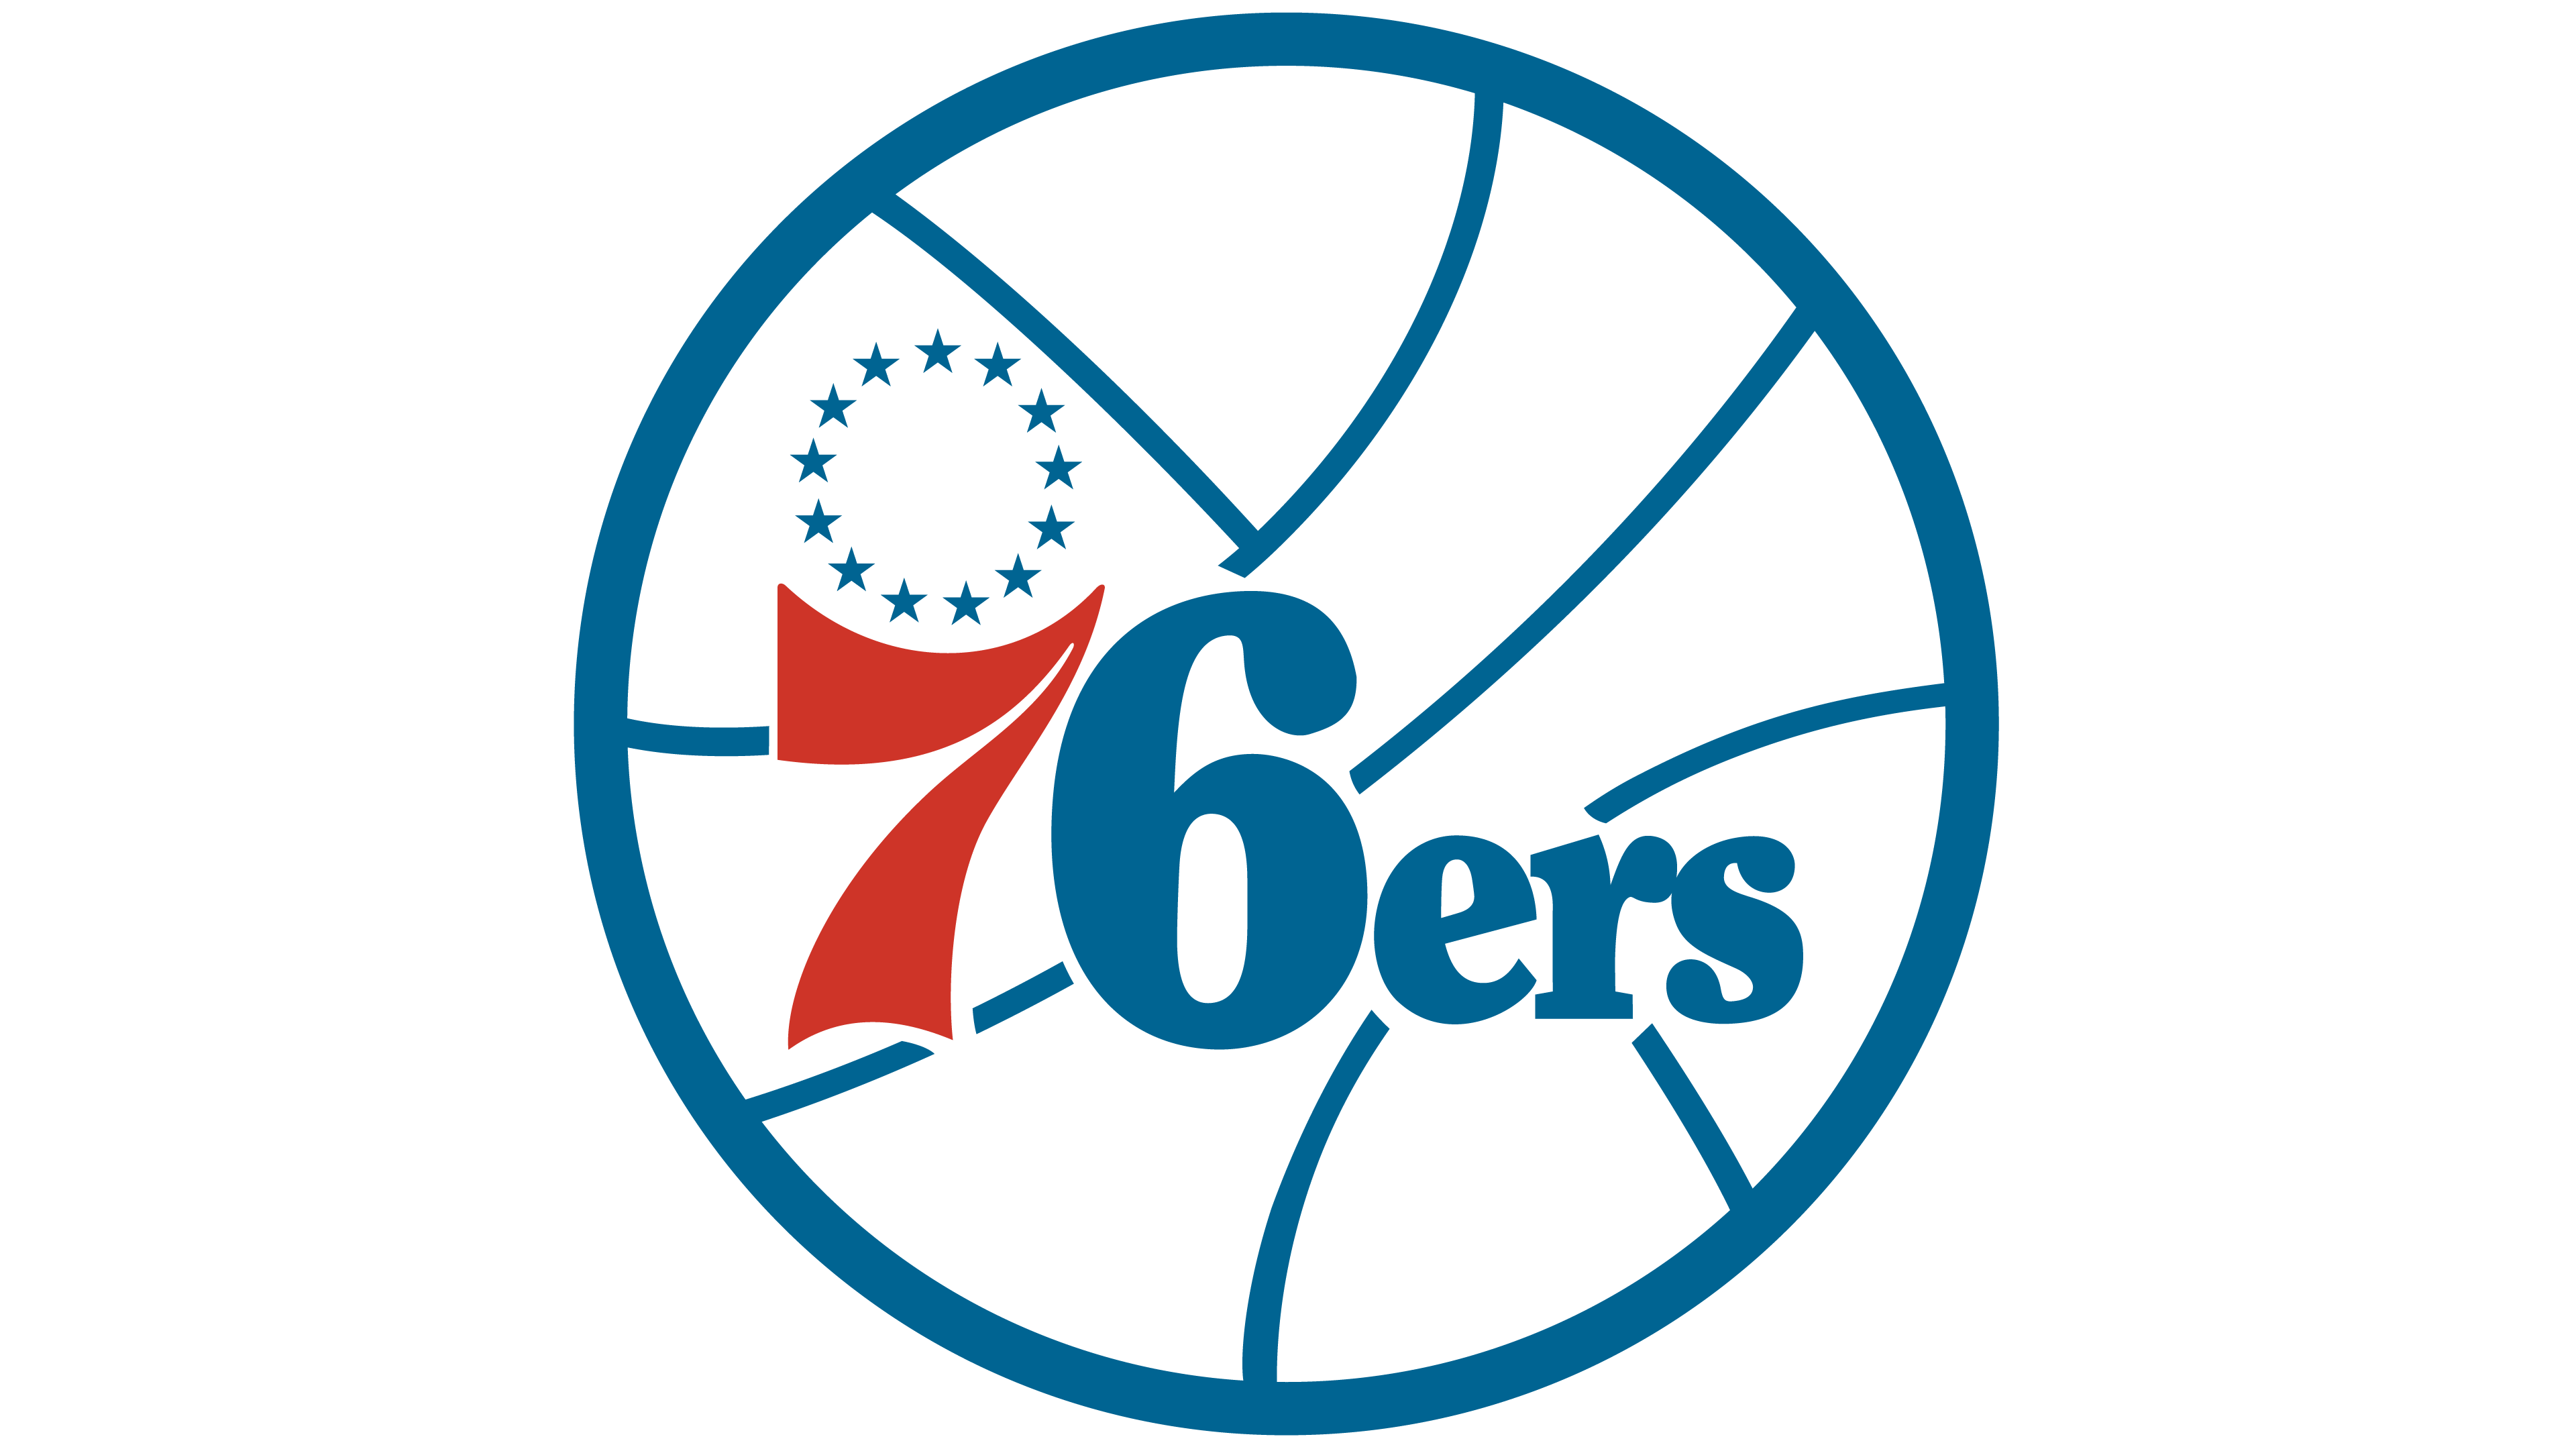 Philadelphia 76ers Logo - Philadelphia 76ers Logo History Team Name and emblem